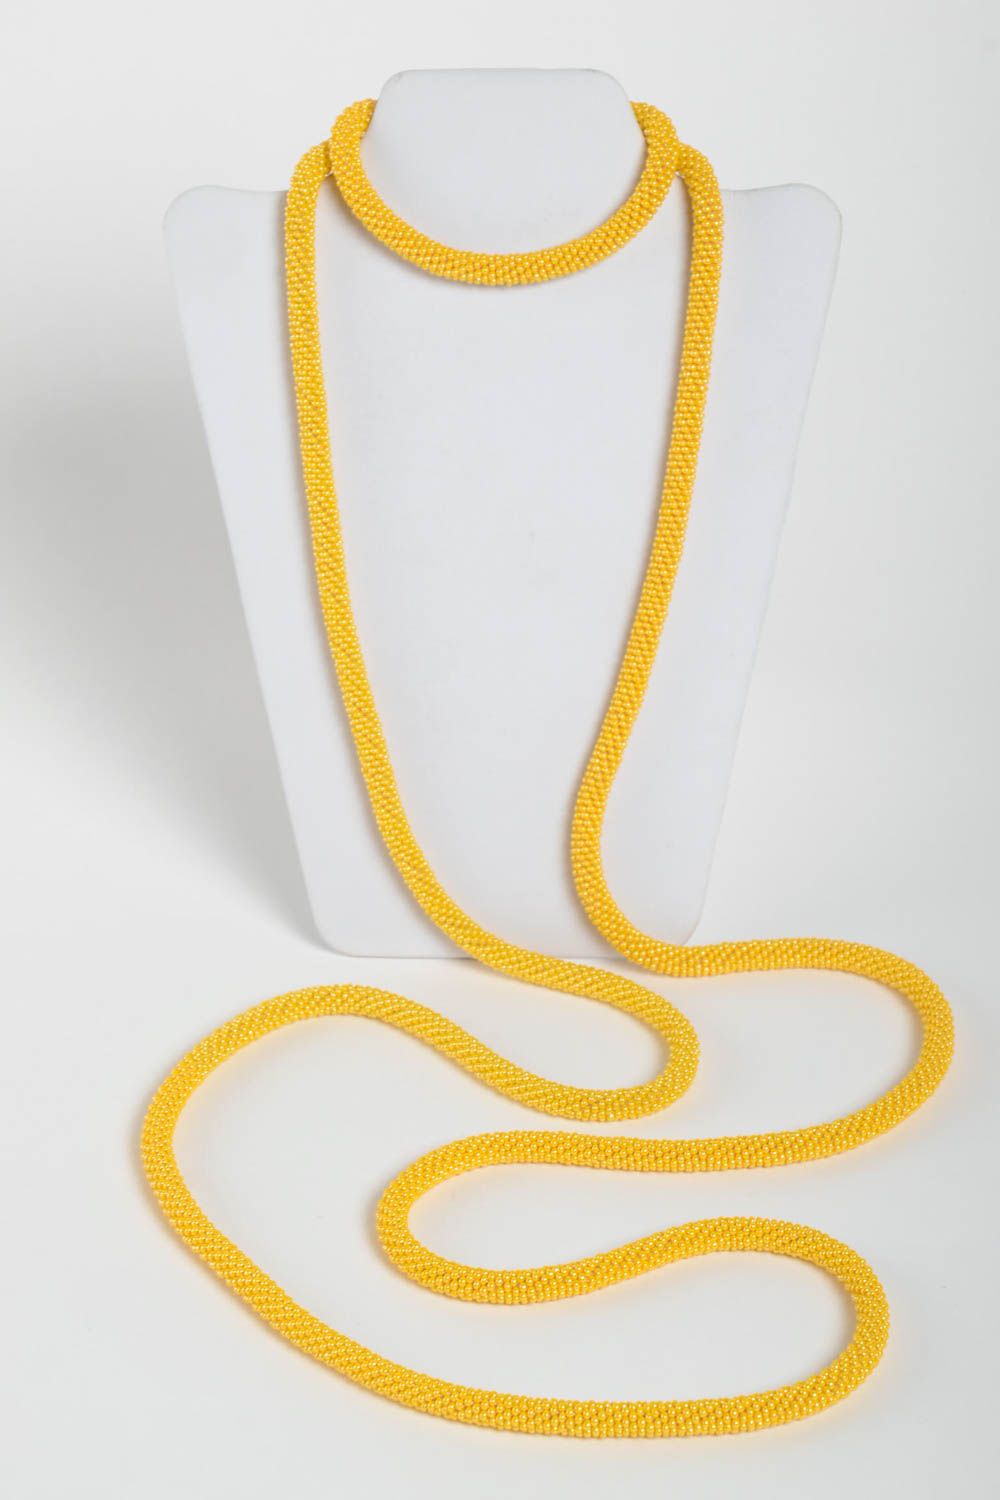 Stylish handmade cord necklace long yellow jewelry handmade designer accessories photo 3